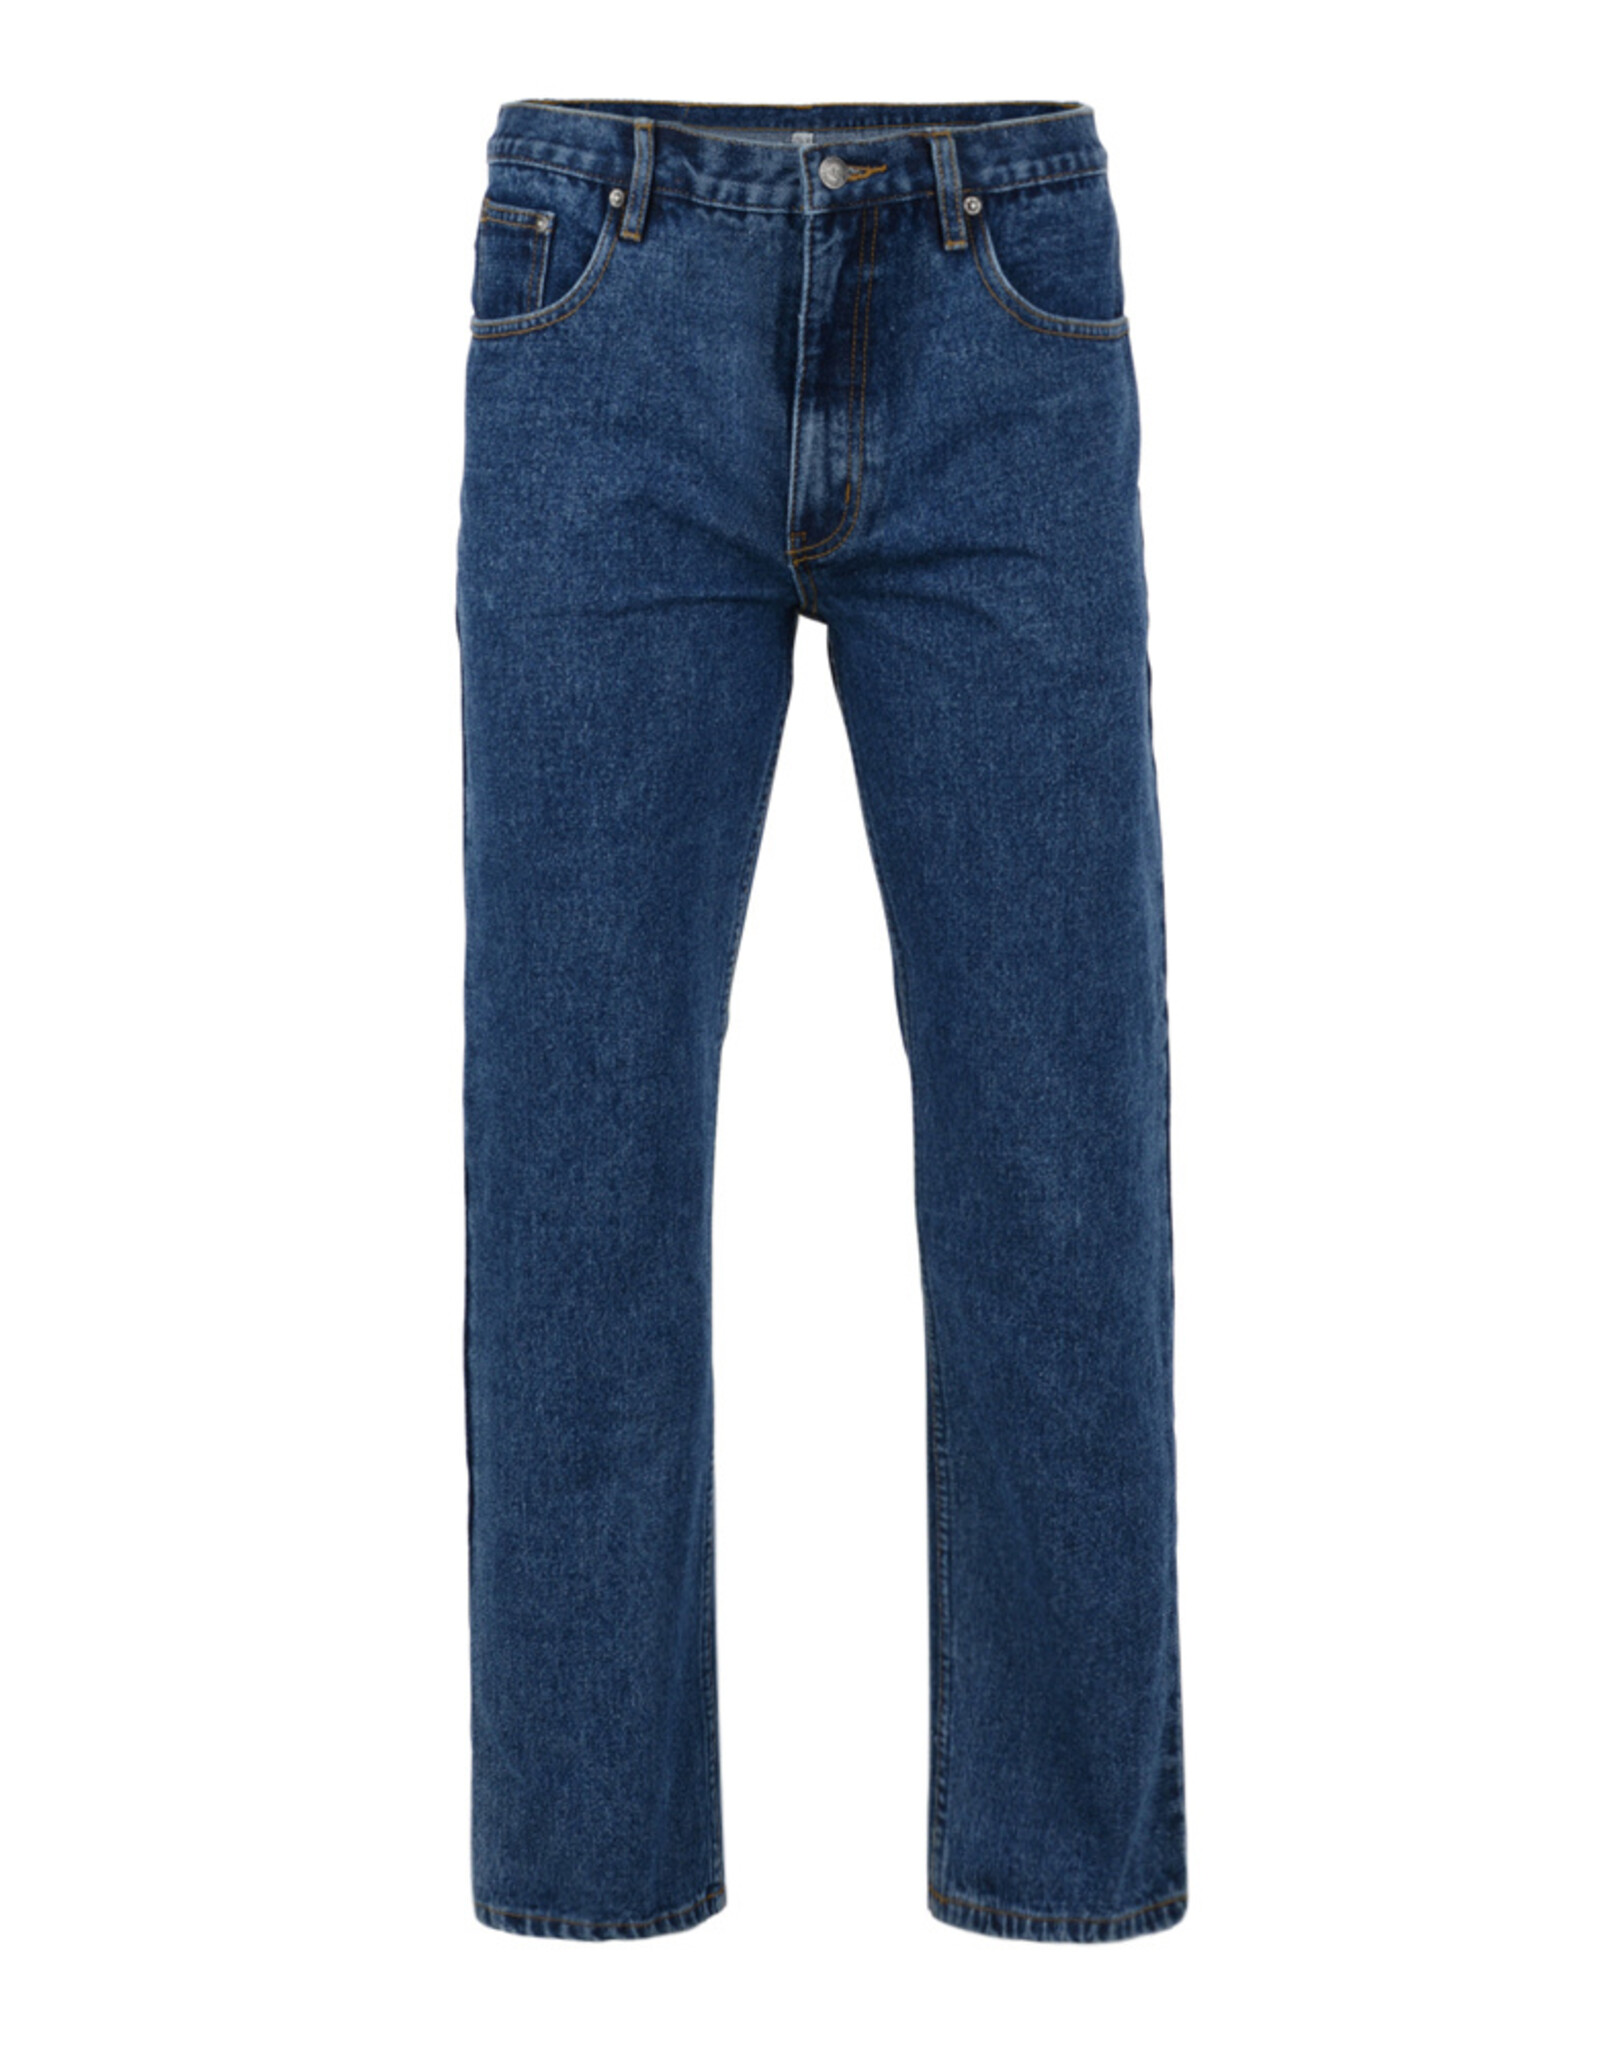 Kam Jeans SALE JEANS 60 S spijkerbroek Regular fit Denim Stonewash blauw